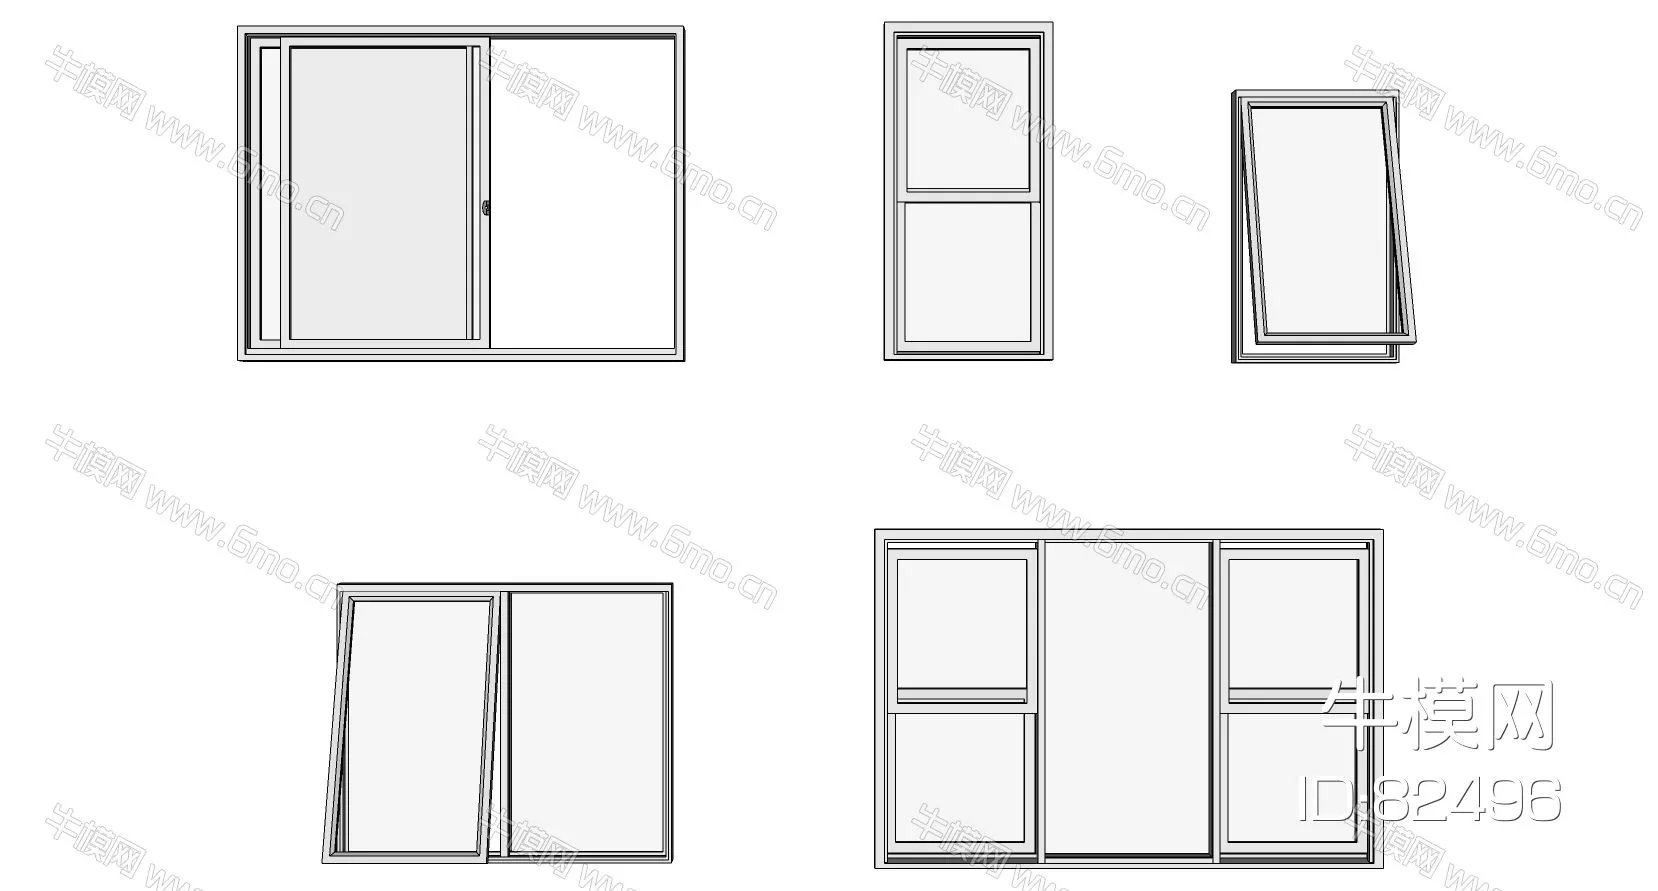 MODERN DOOR AND WINDOWS - SKETCHUP 3D MODEL - ENSCAPE - 82496